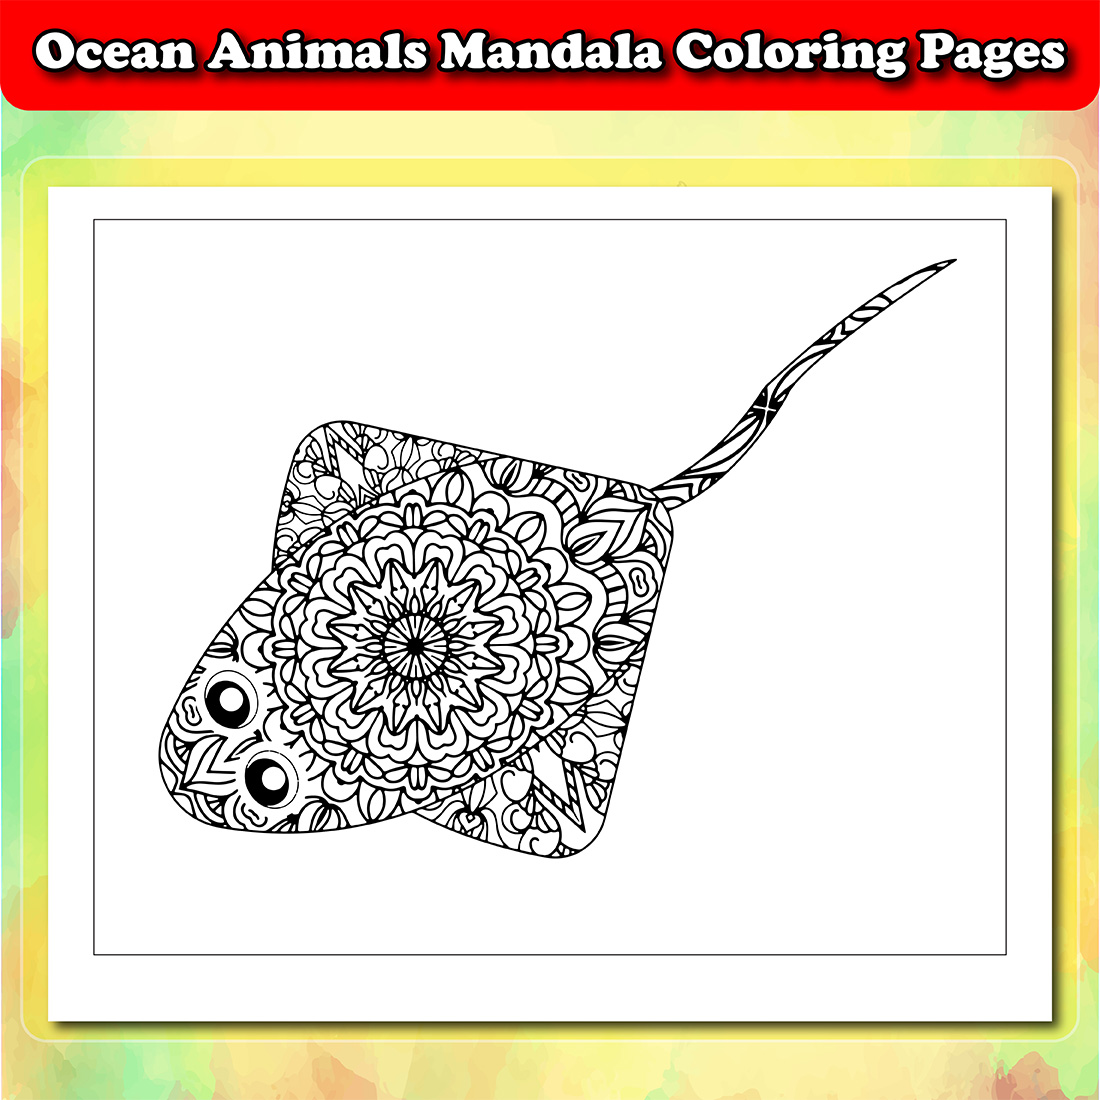 Ocean Animals Mandala Coloring Pages.